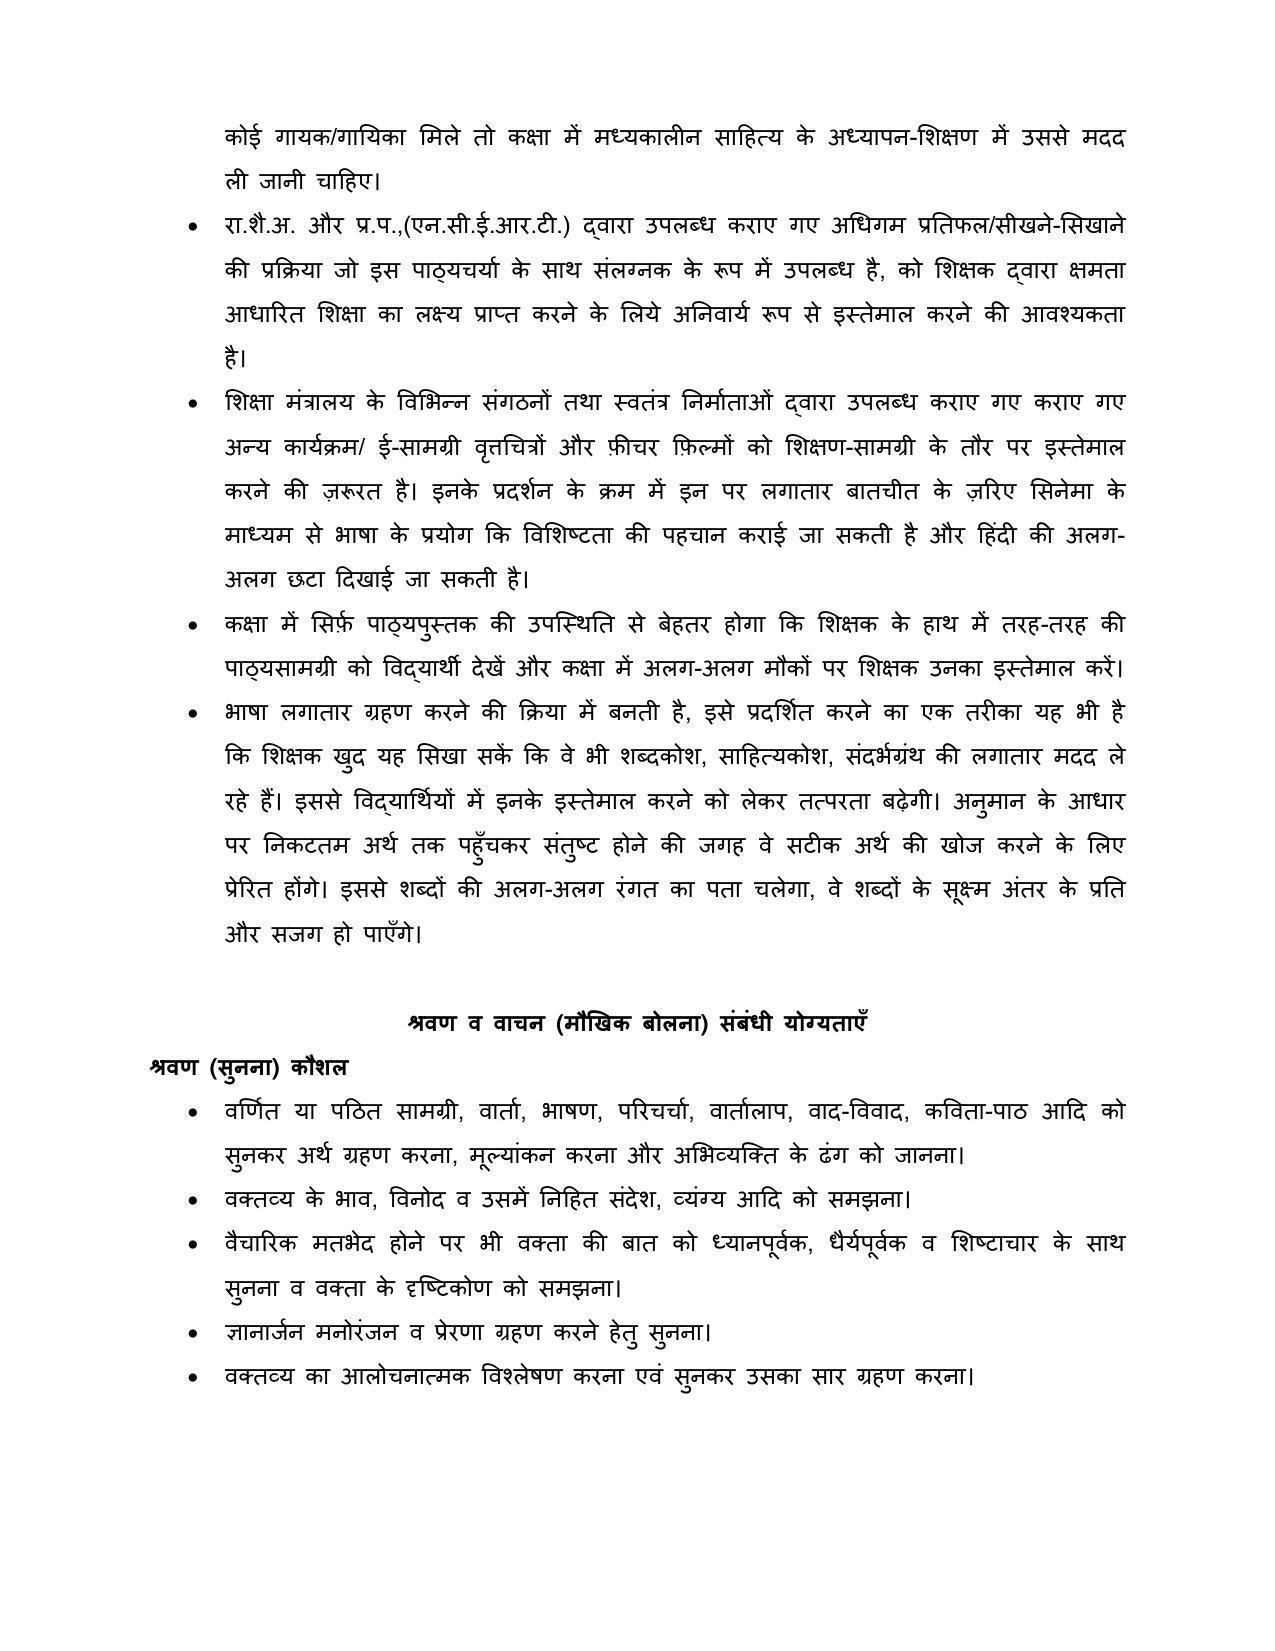 CBSE Class 9 & 10 Syllabus 2022-23 - Hindi course- A - Page 4